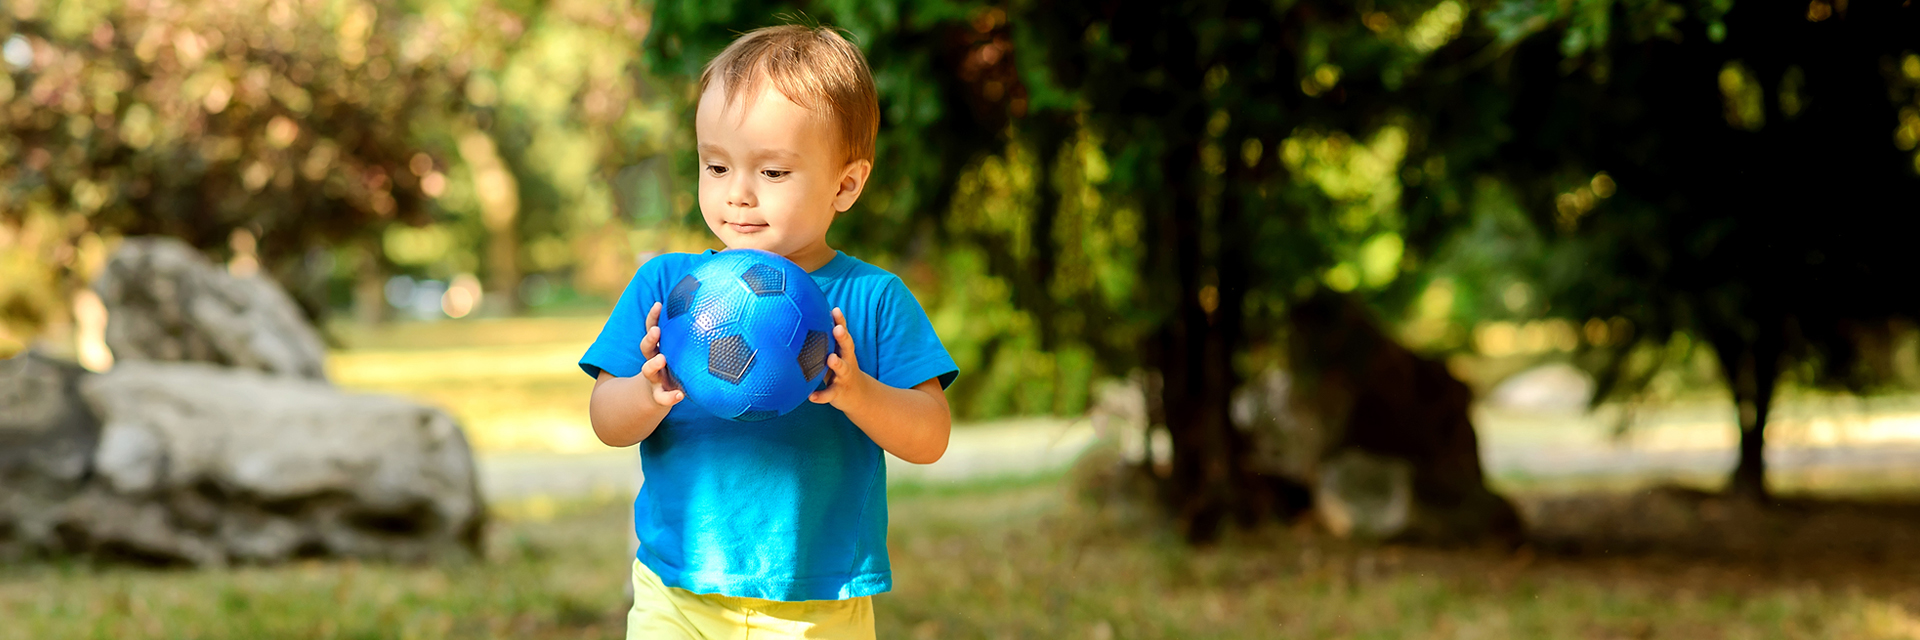 Little boy outside holding ball